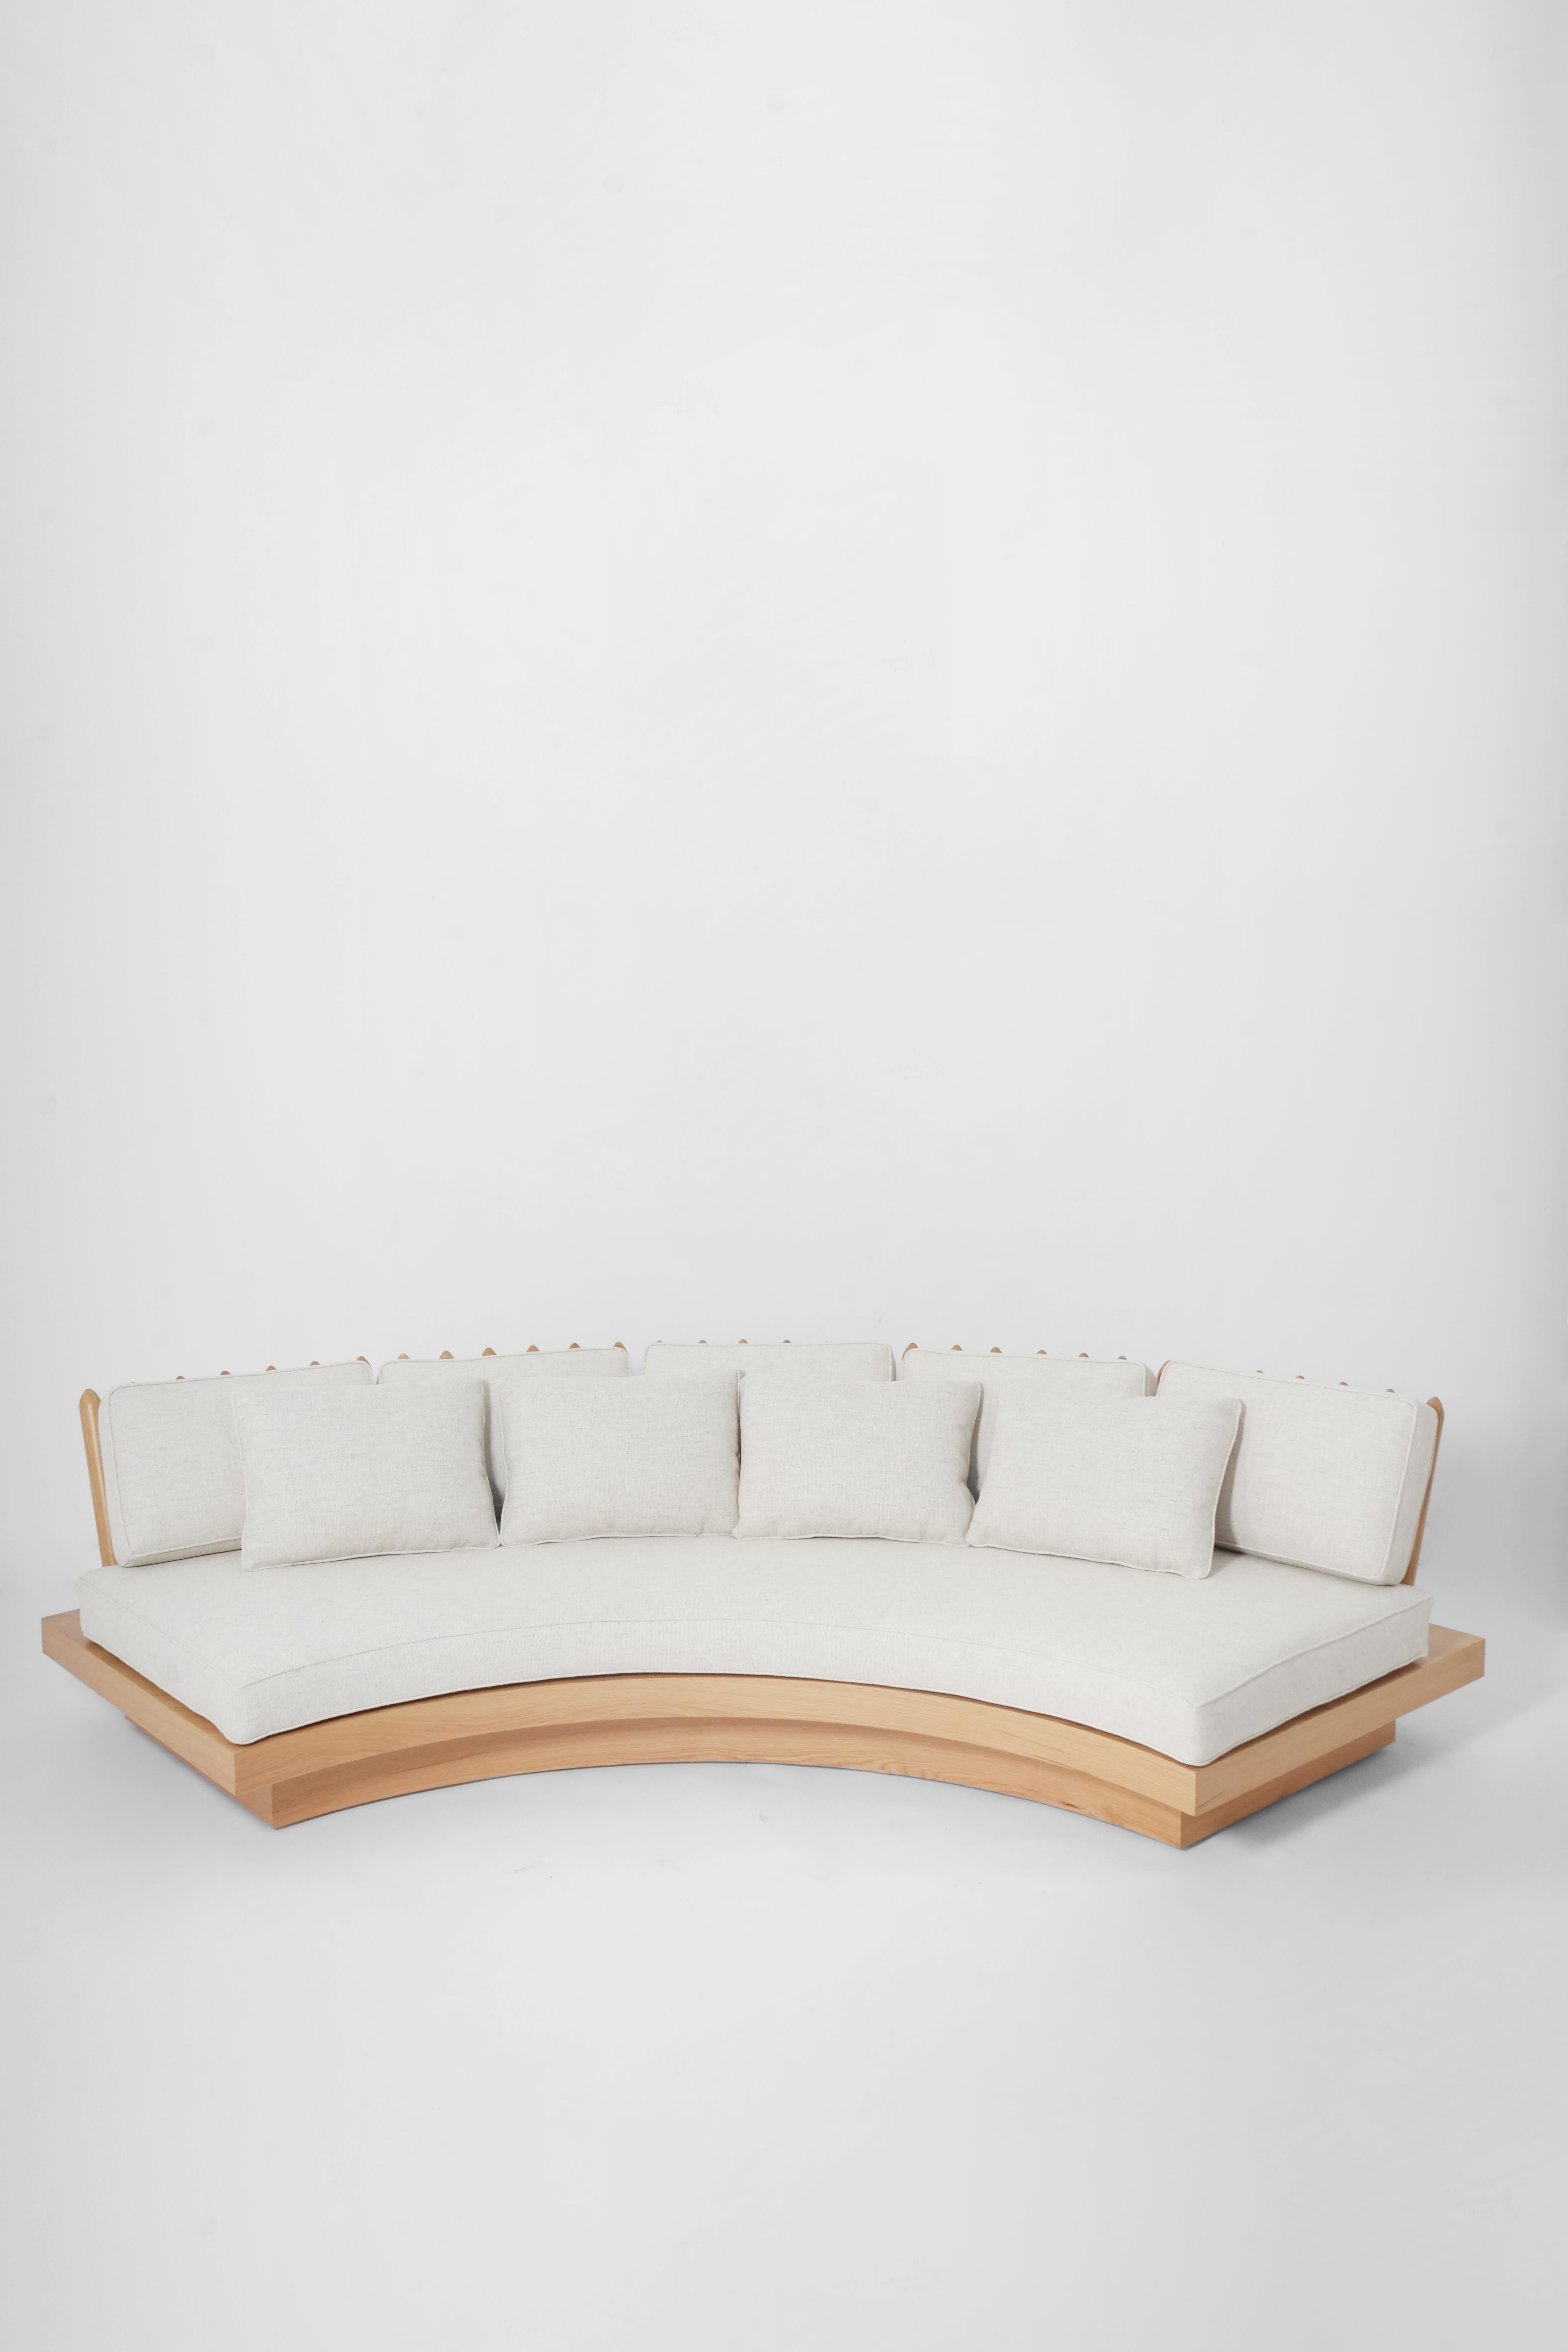 San Romano round pine sofa, Barracuda Edition.